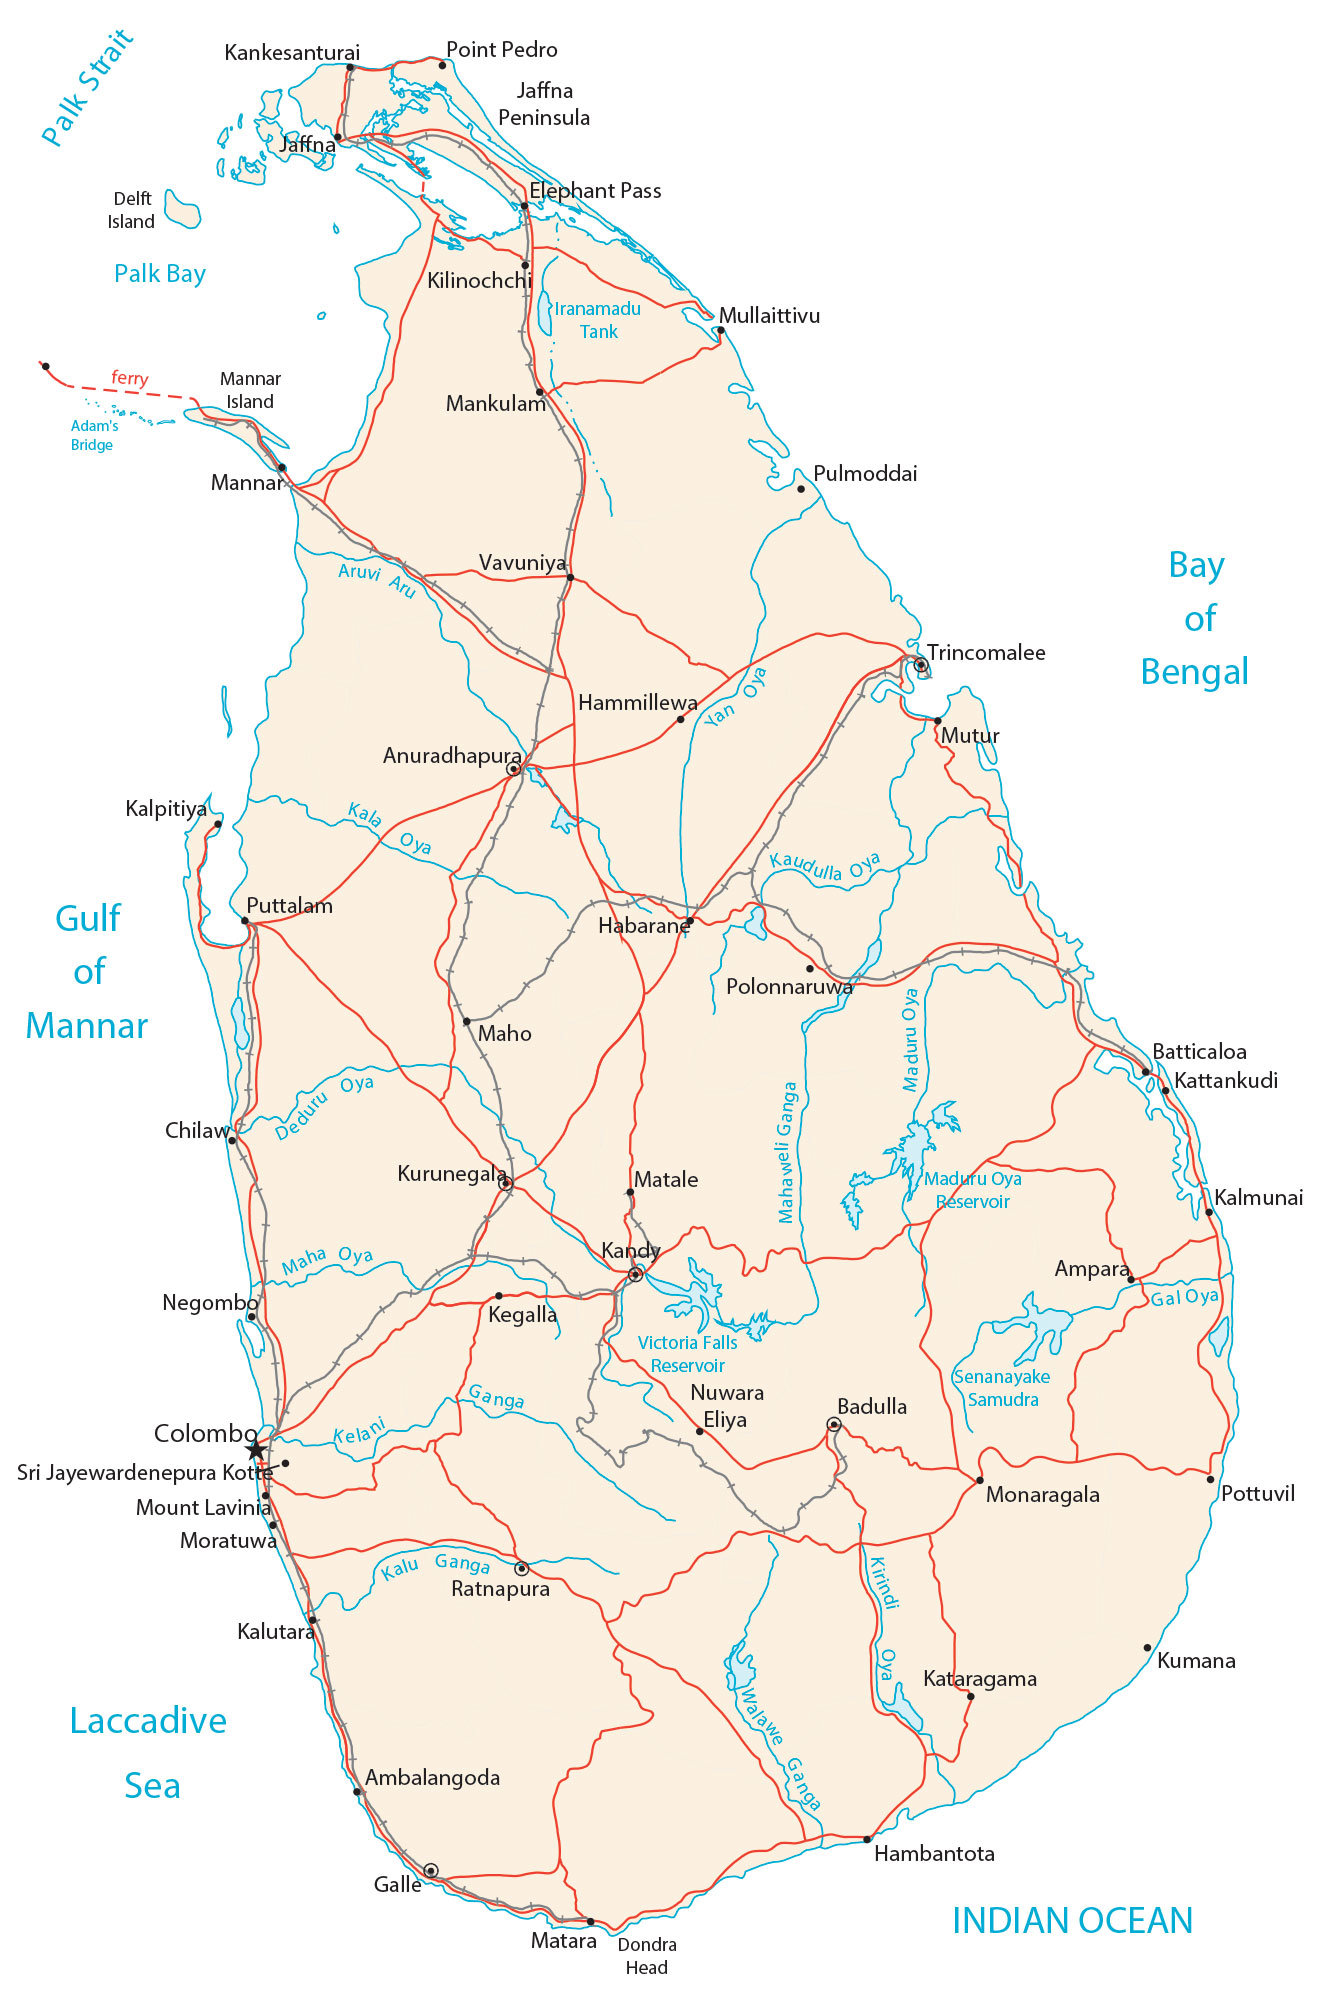 https://gisgeography.com/wp-content/uploads/2017/09/Sri-Lanka-Map.jpg